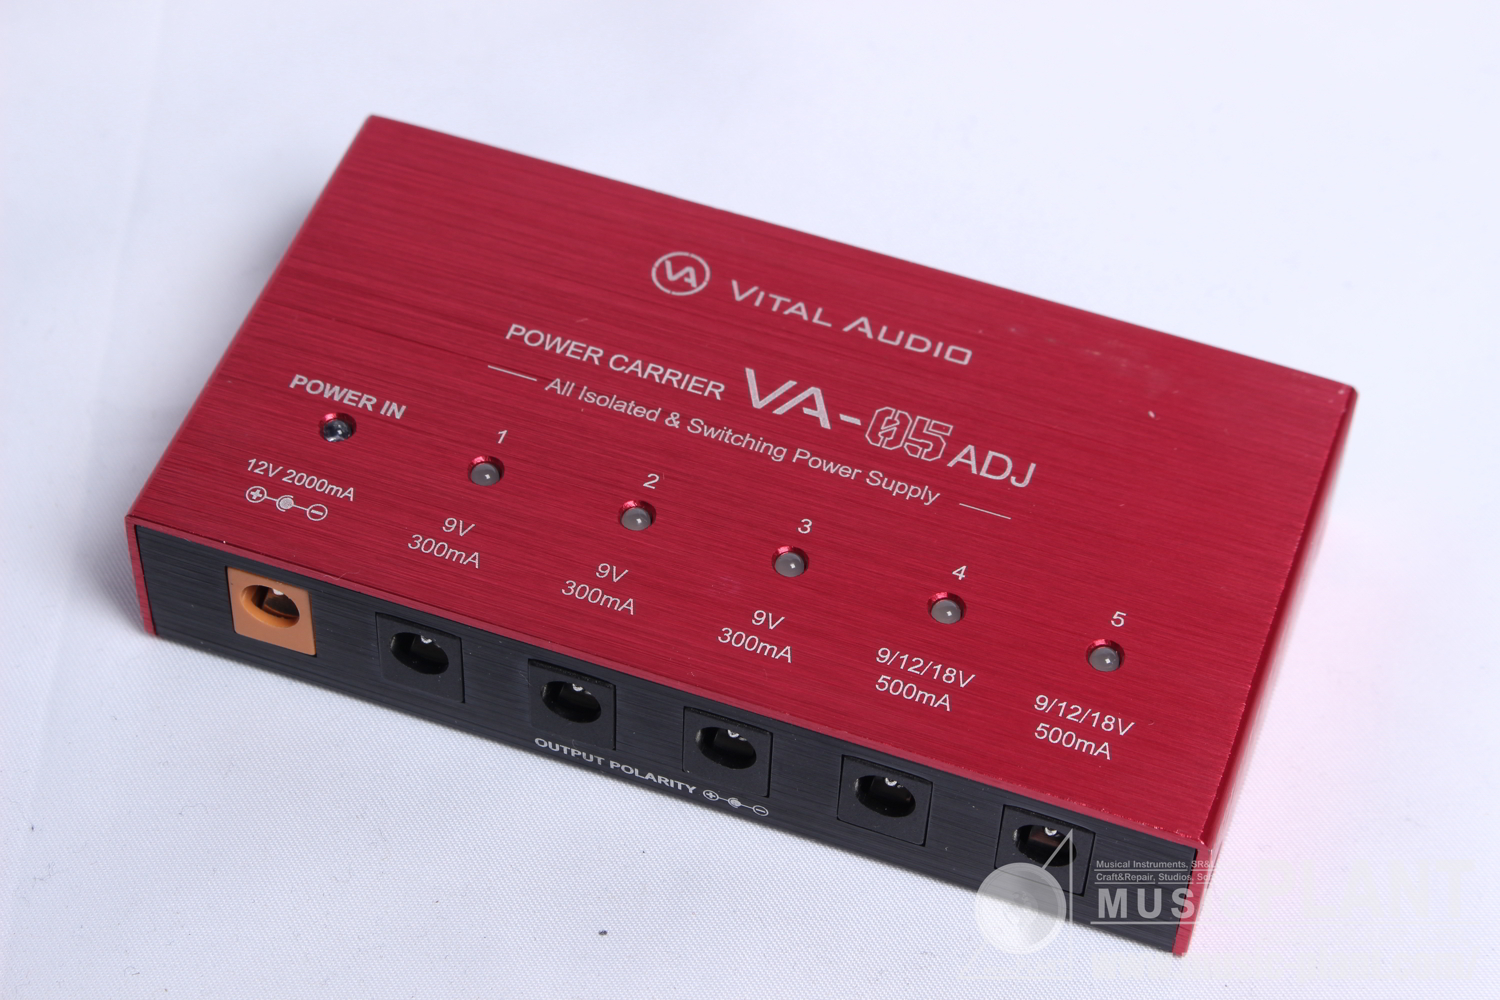 Vital Audio パワーサプライVA-05 ADJ中古()売却済みです。あしからずご了承ください。 | MUSIC PLANT WEBSHOP